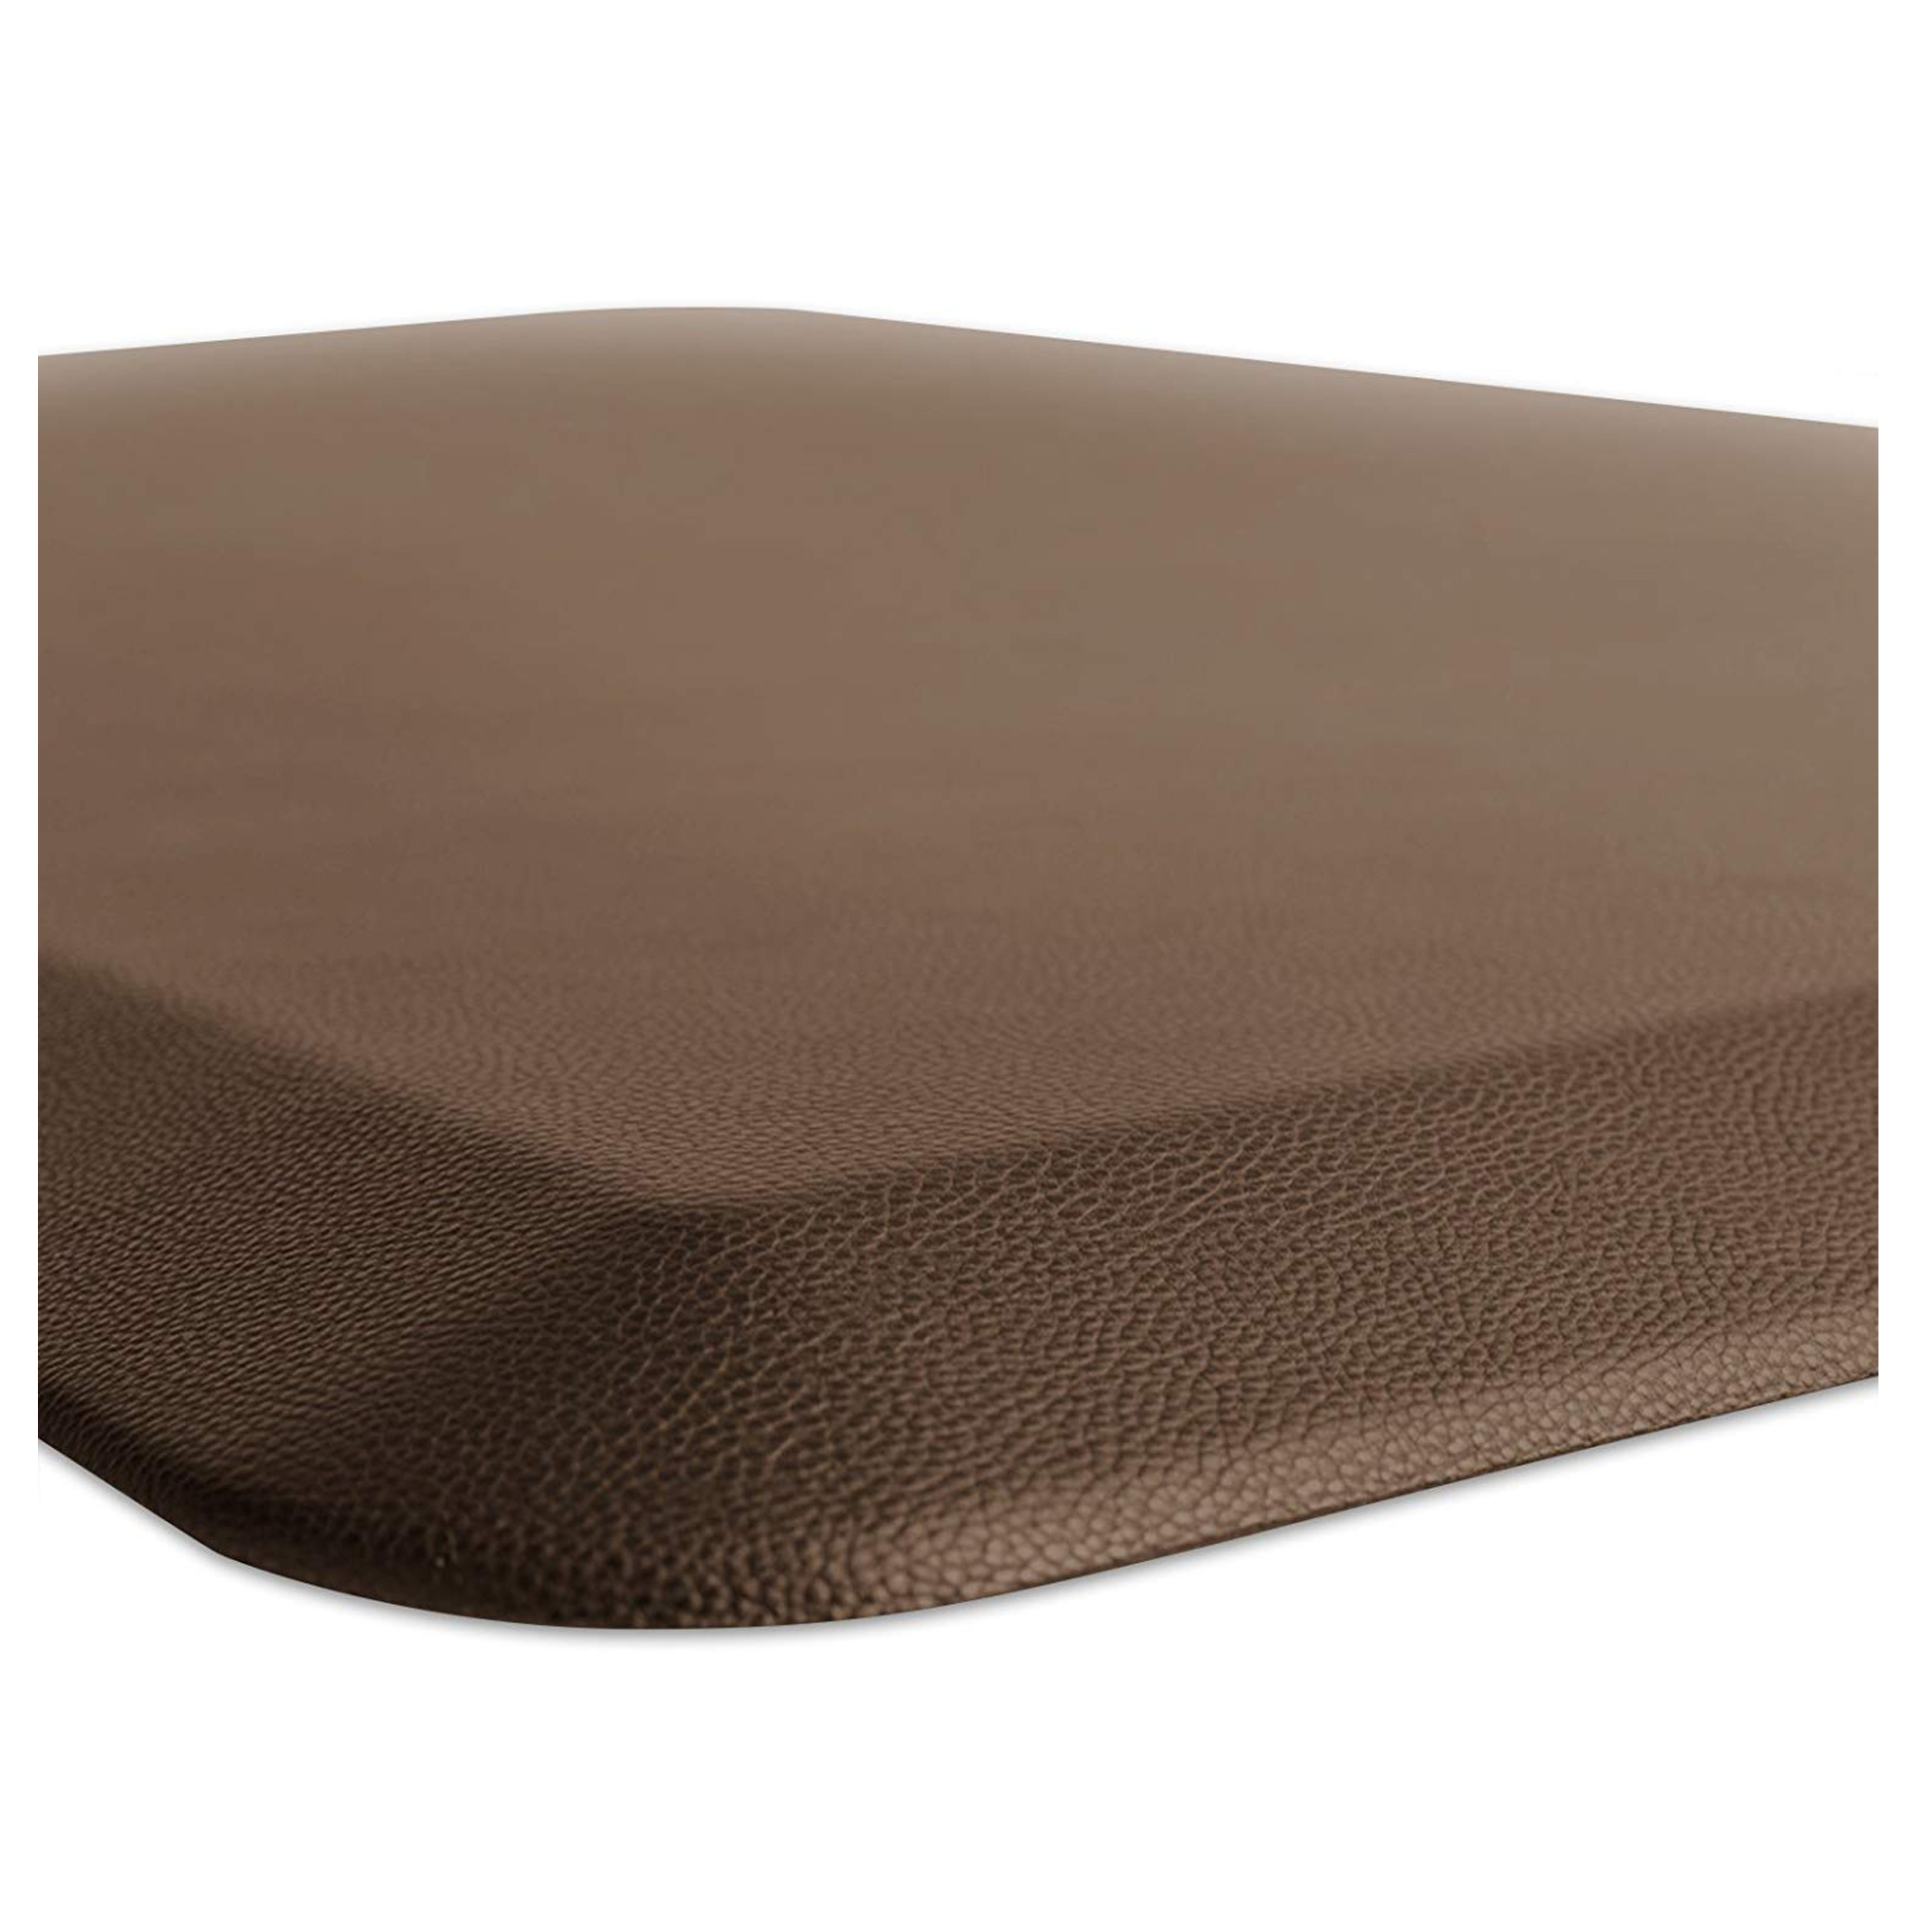 2018 universal non-slip anti-fatigue wholesale mat with different color